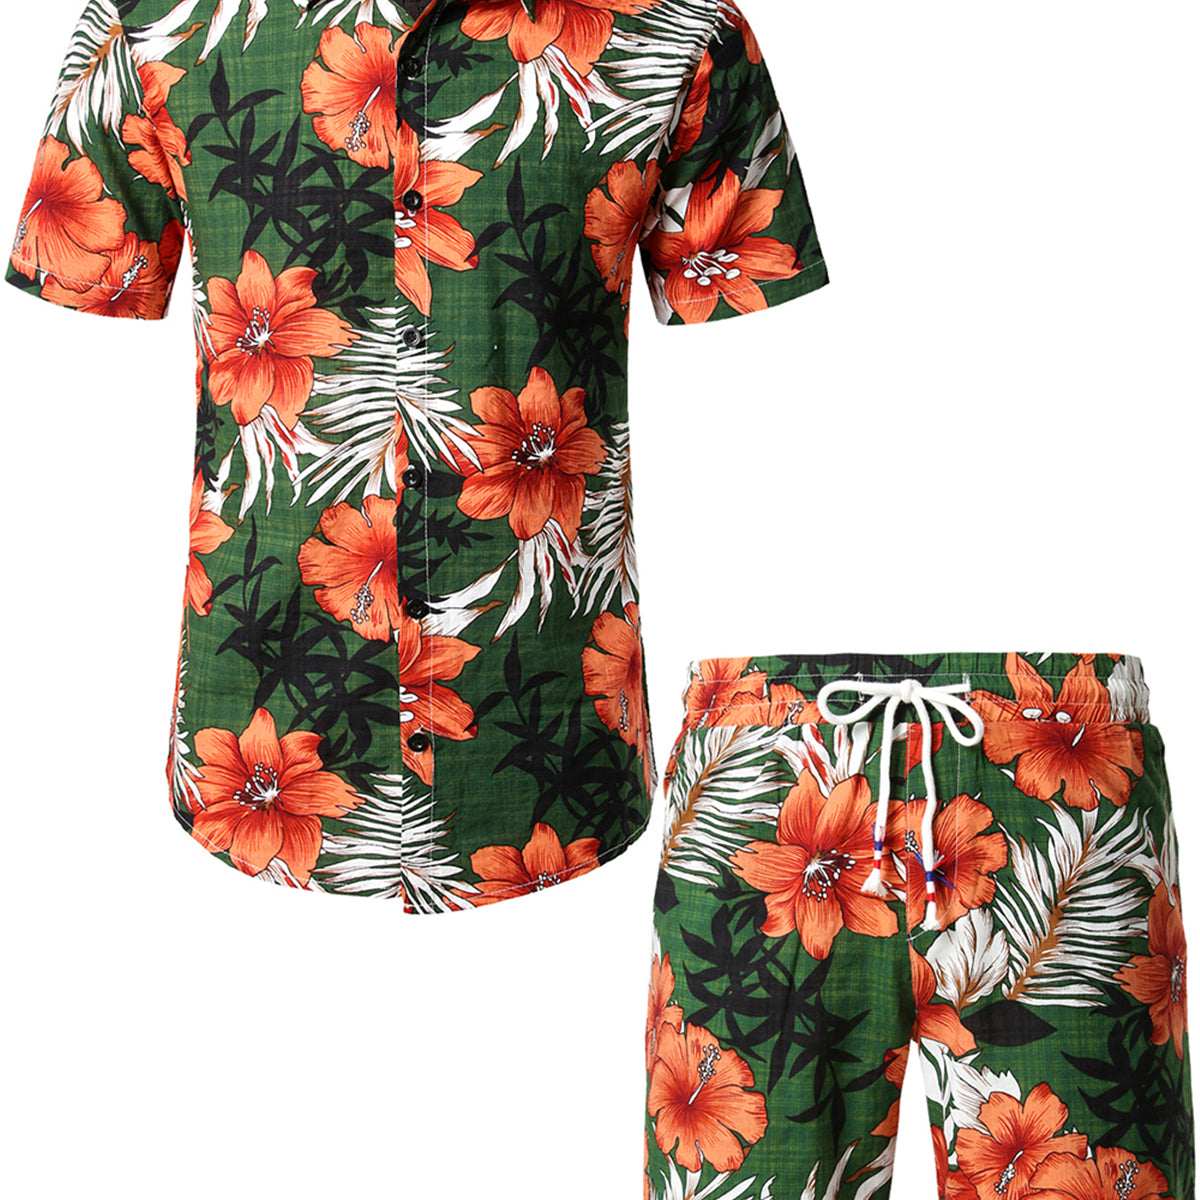 Men's Green Flower Tropical Hawaiian Floral Matching Shirt and Shorts Set